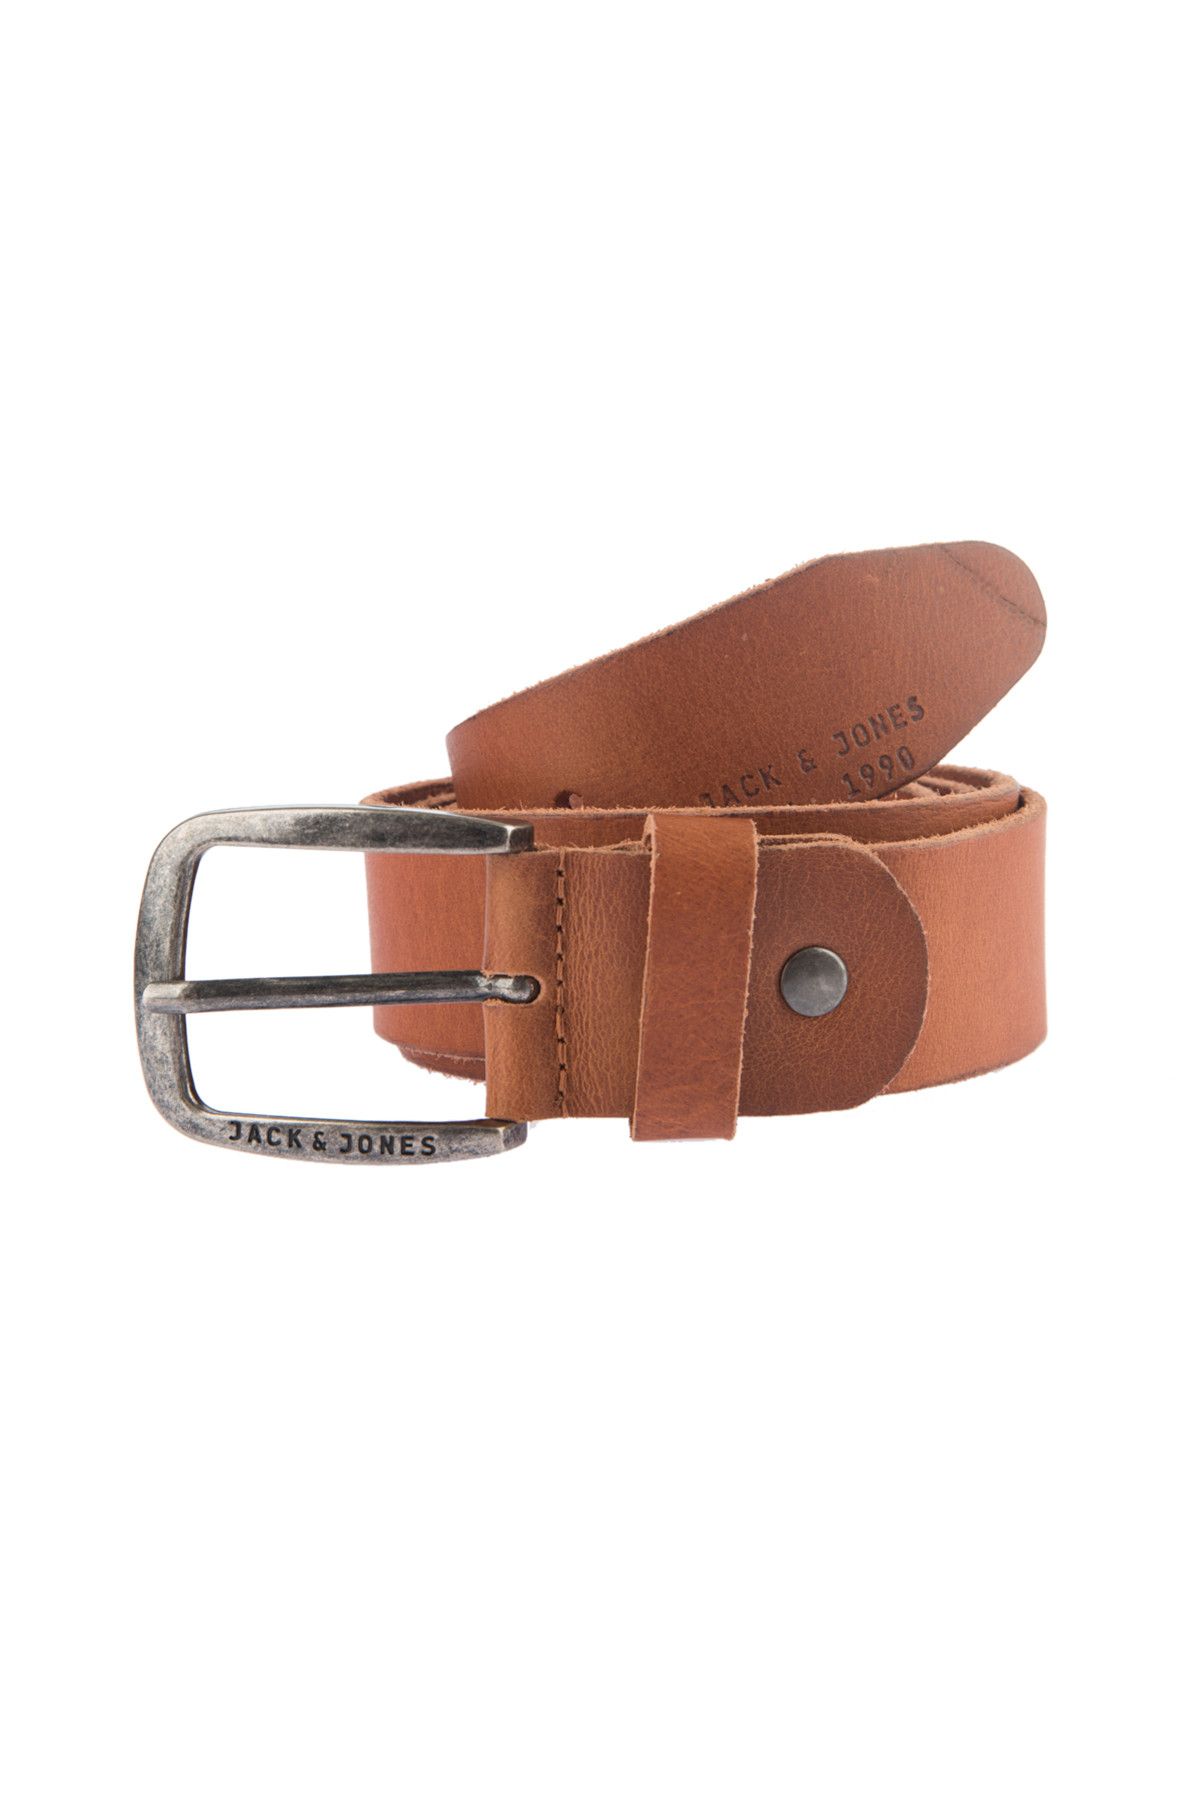 Jack & Jones Kemer - Paul Leather Belt 12111286